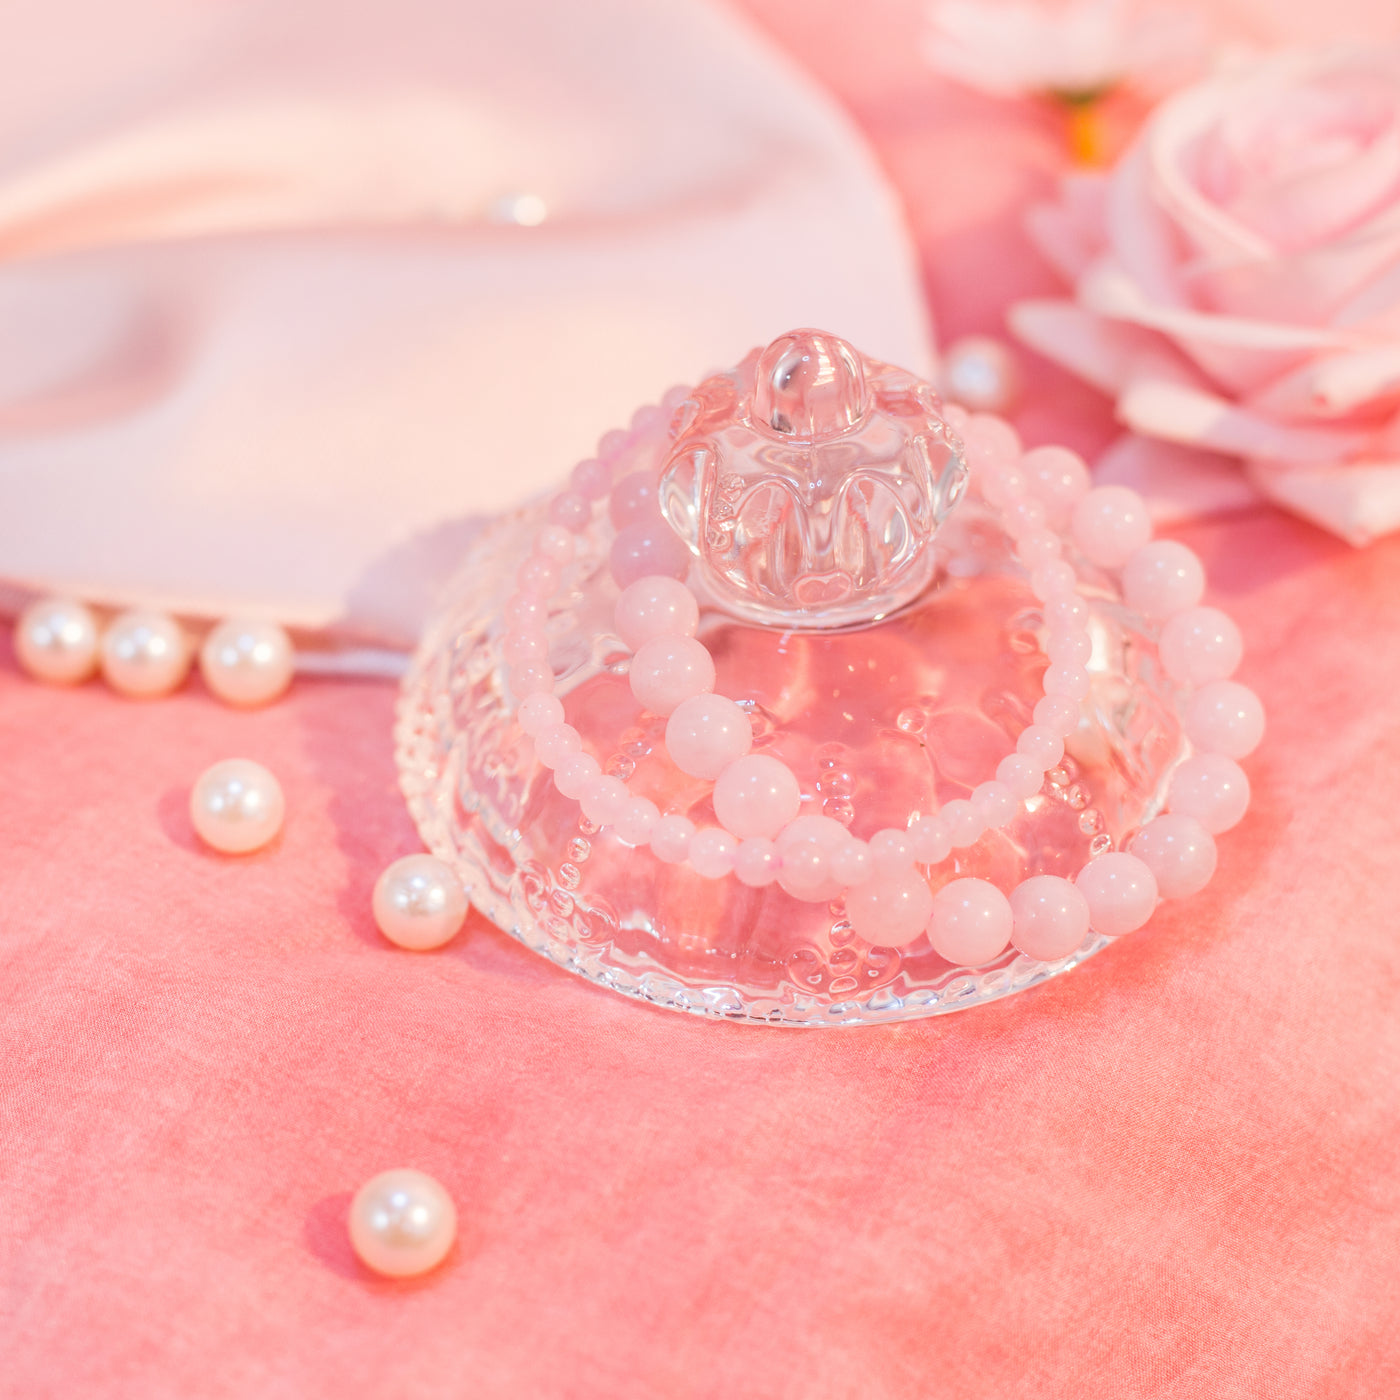 Crystal Bead Bracelet - Rose Quartz